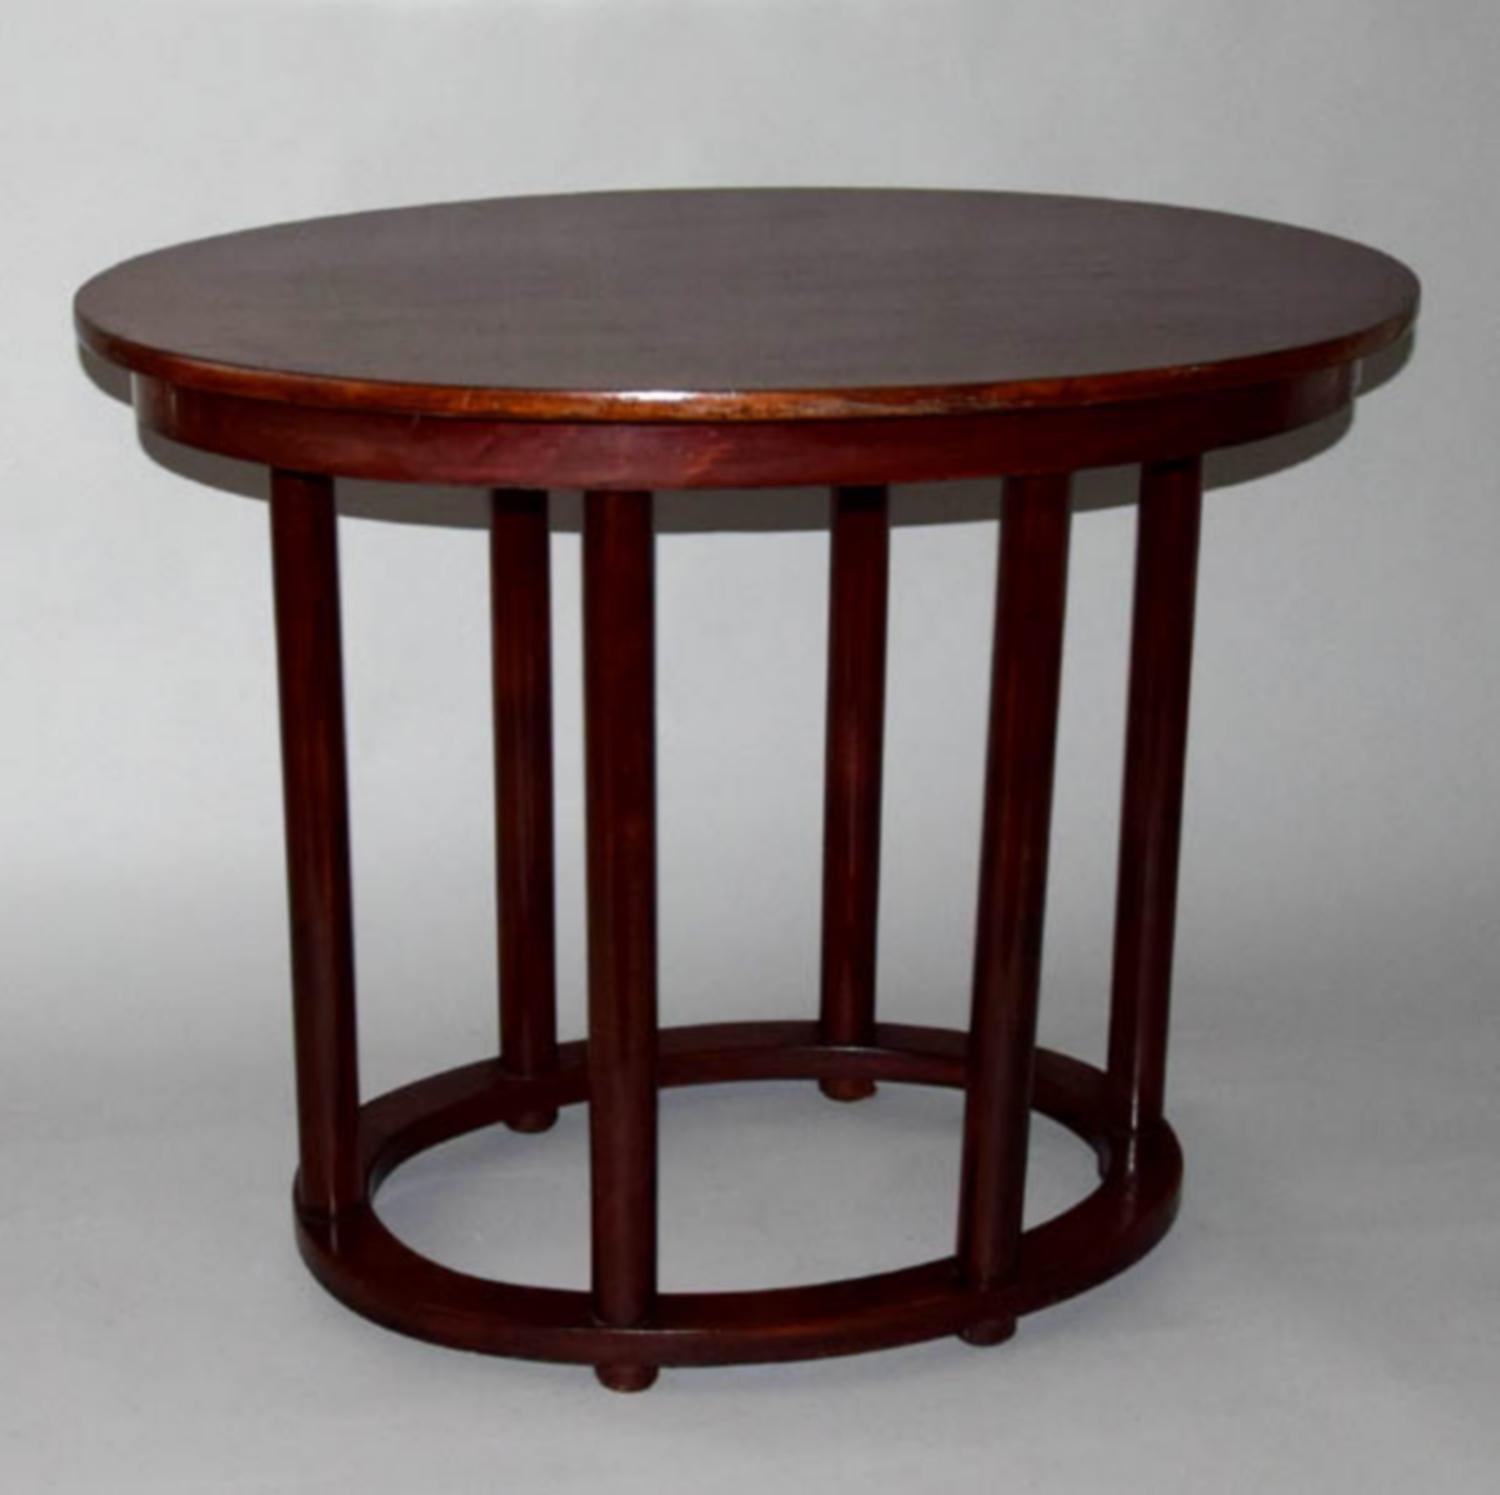 Art Nouveau Josef Hoffmann Oval Table For Thonet, 1910s